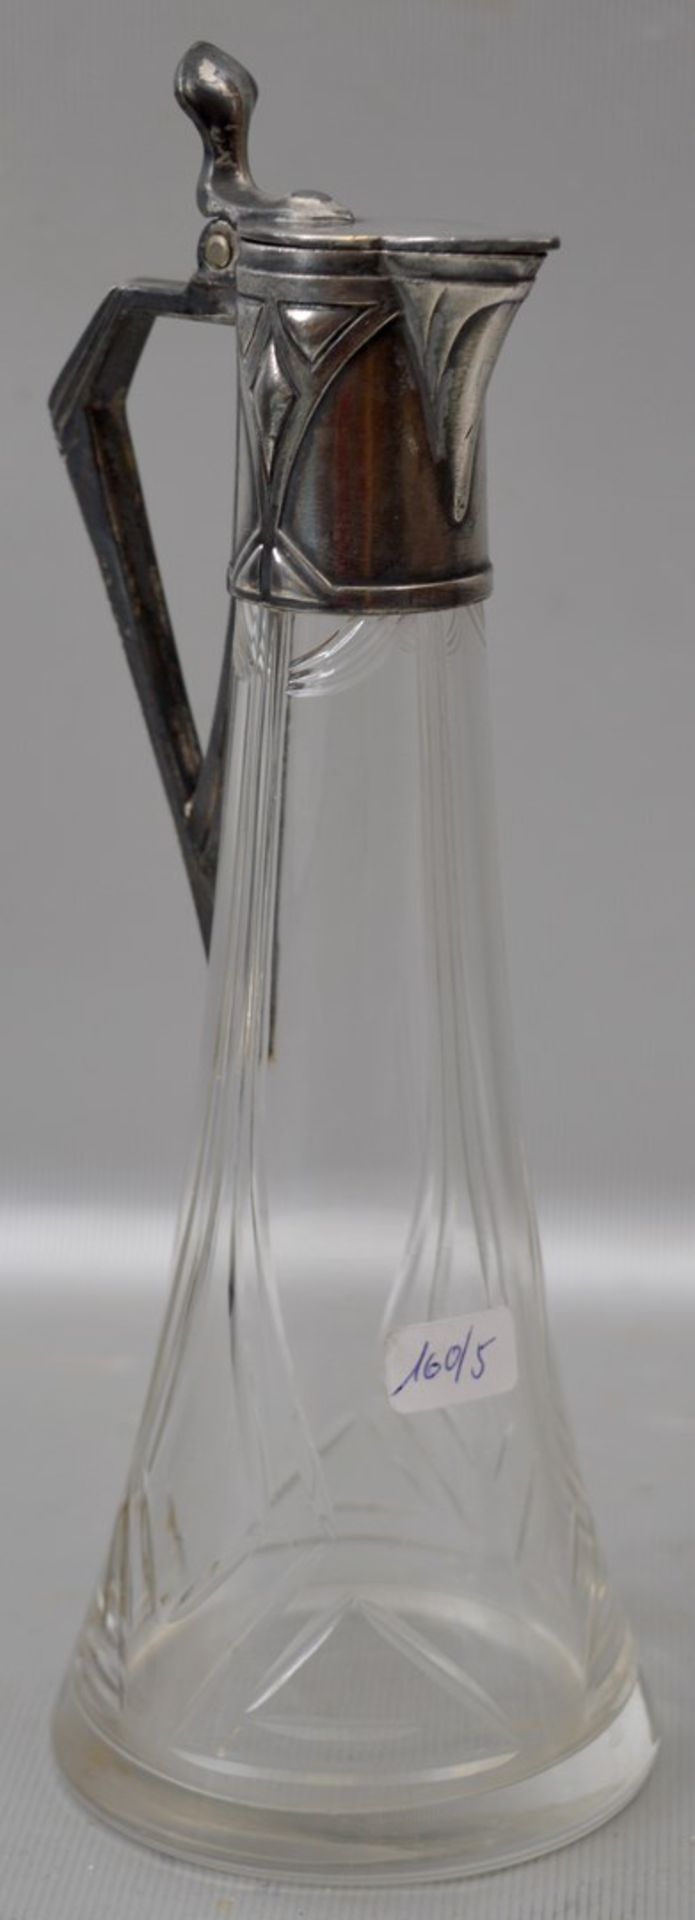 Jugendstil-Likörkaraffe farbl. Glas, Griff und Ausgießer Weißmetall, mit Jugendstil-Ornamenten